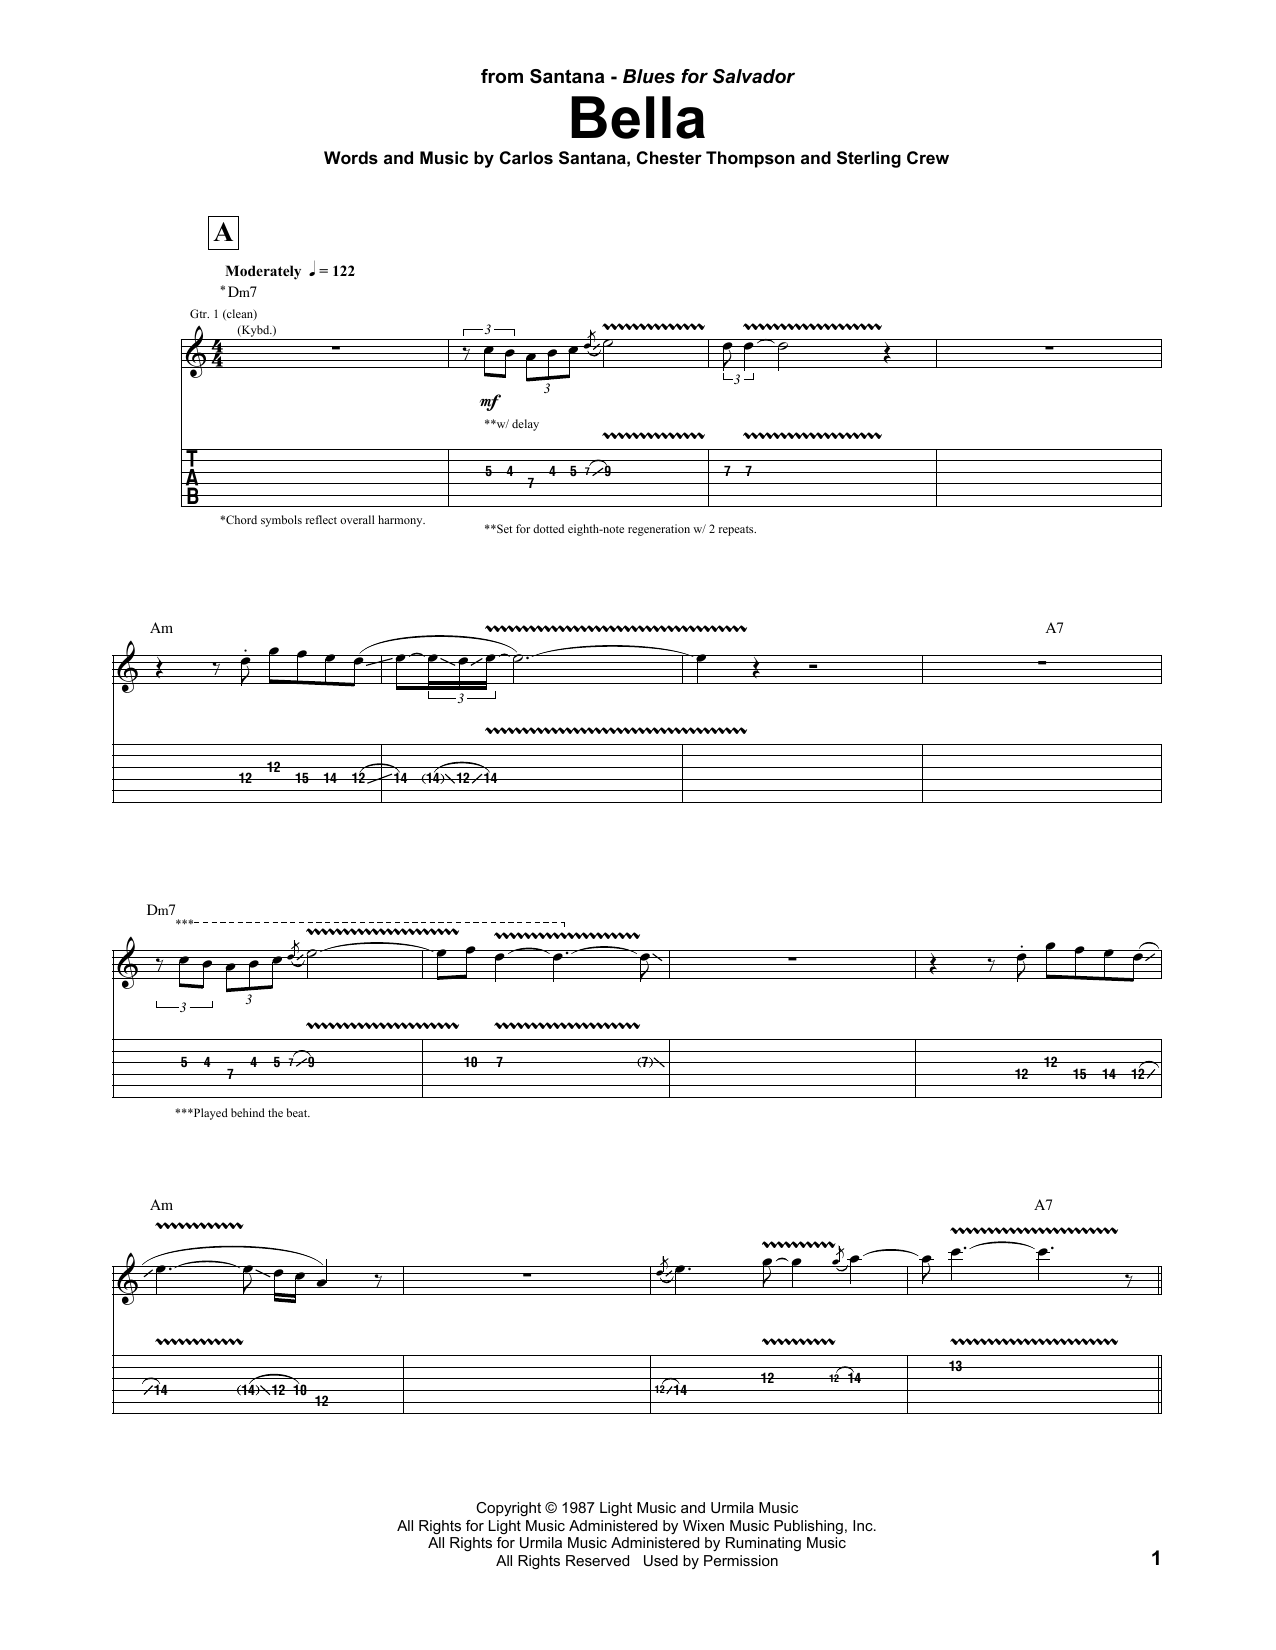 Carlos Santana Bella Sheet Music Notes & Chords for Guitar Tab - Download or Print PDF